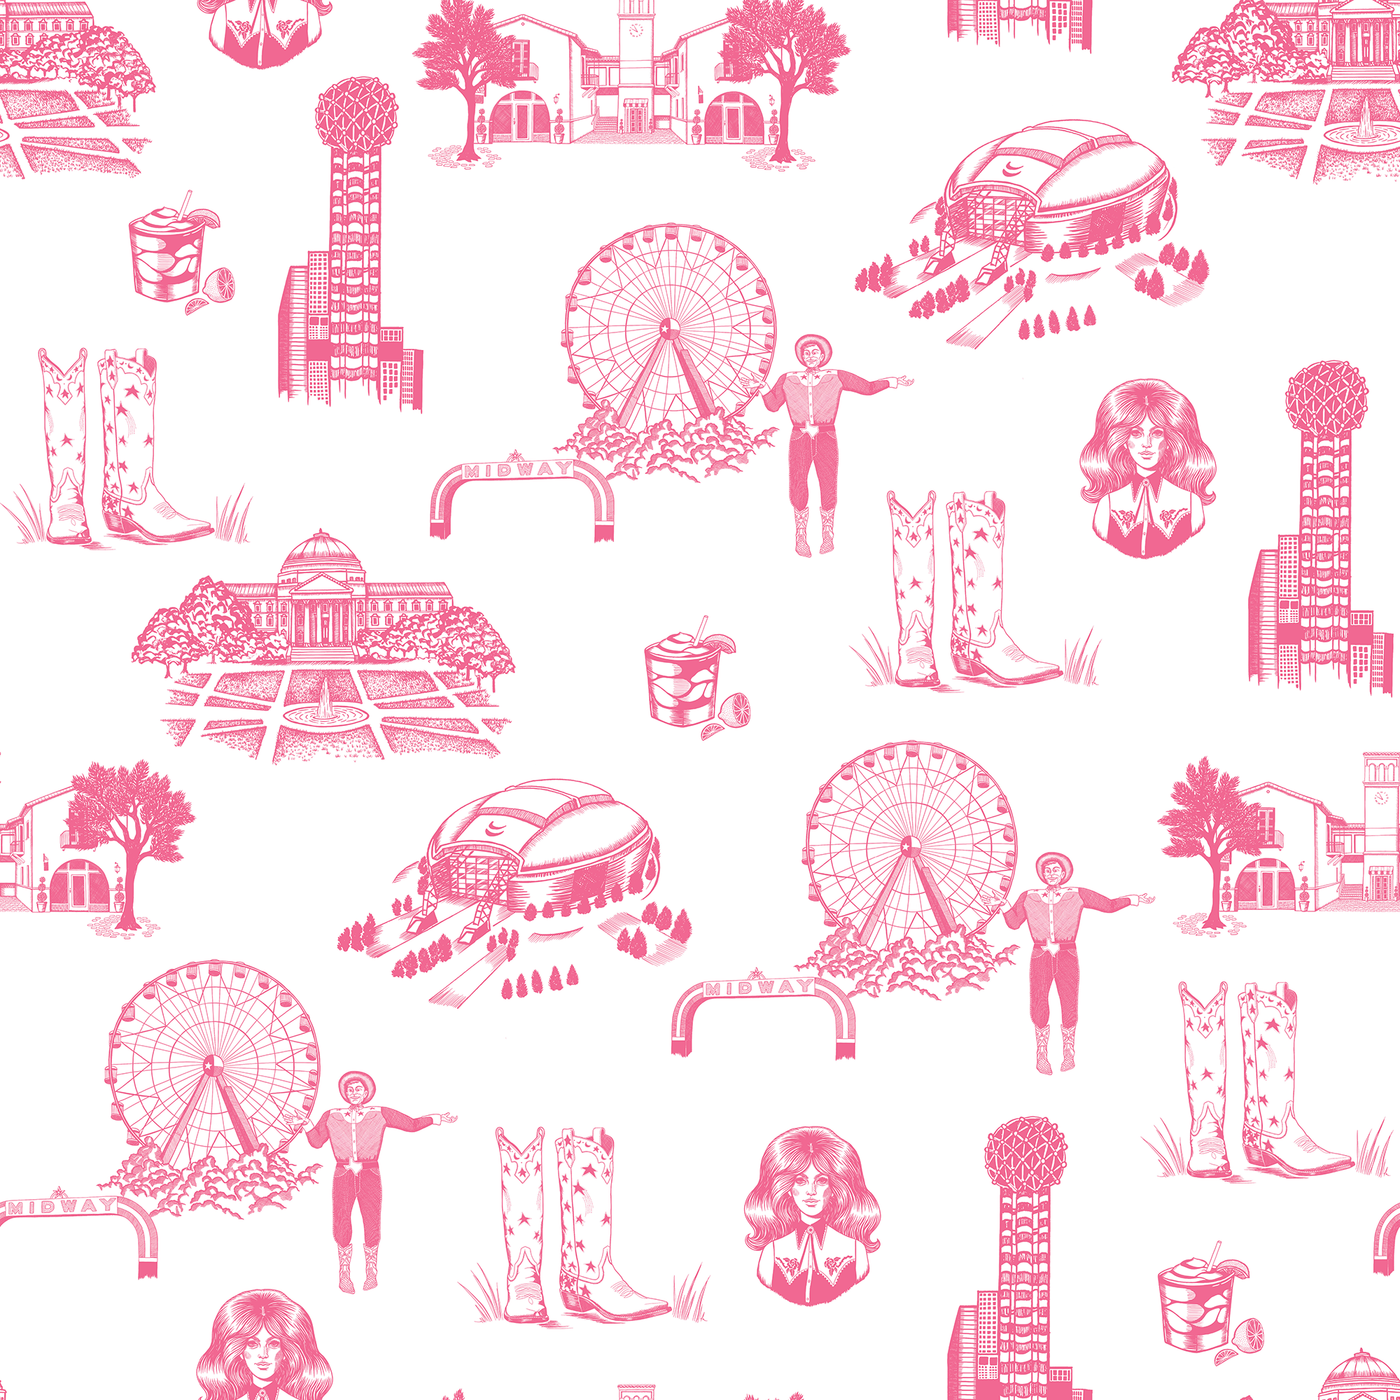 Peel & Stick Wallpaper Pink / 24"x 48" Dallas Toile Peel & Stick Wallpaper Katie Kime